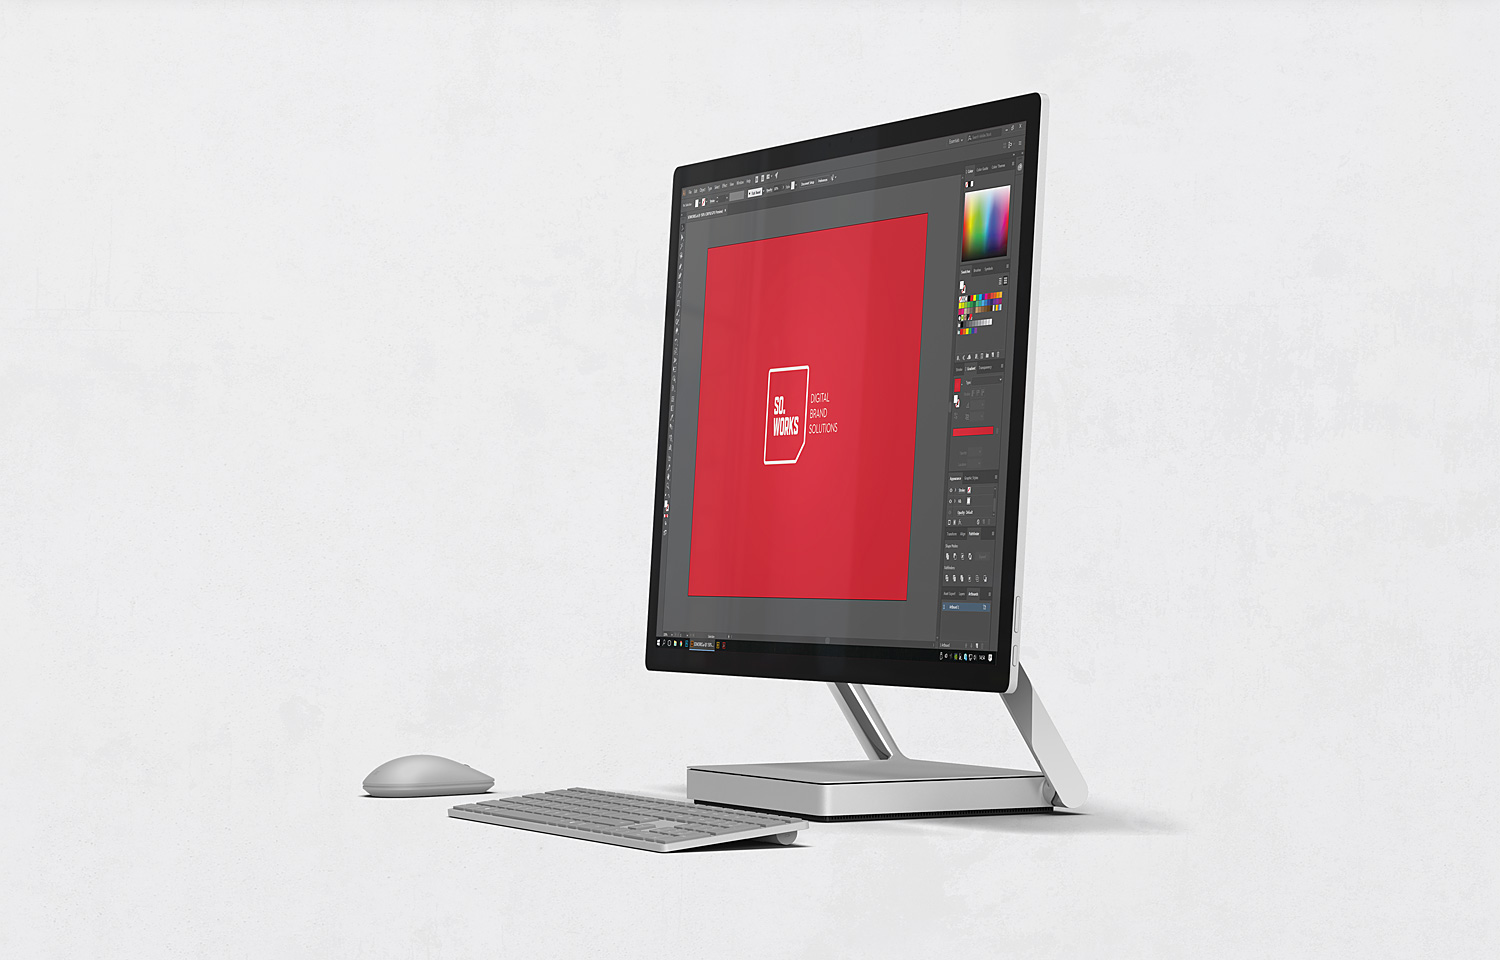 Microsoft Surface Studio Free Mockups